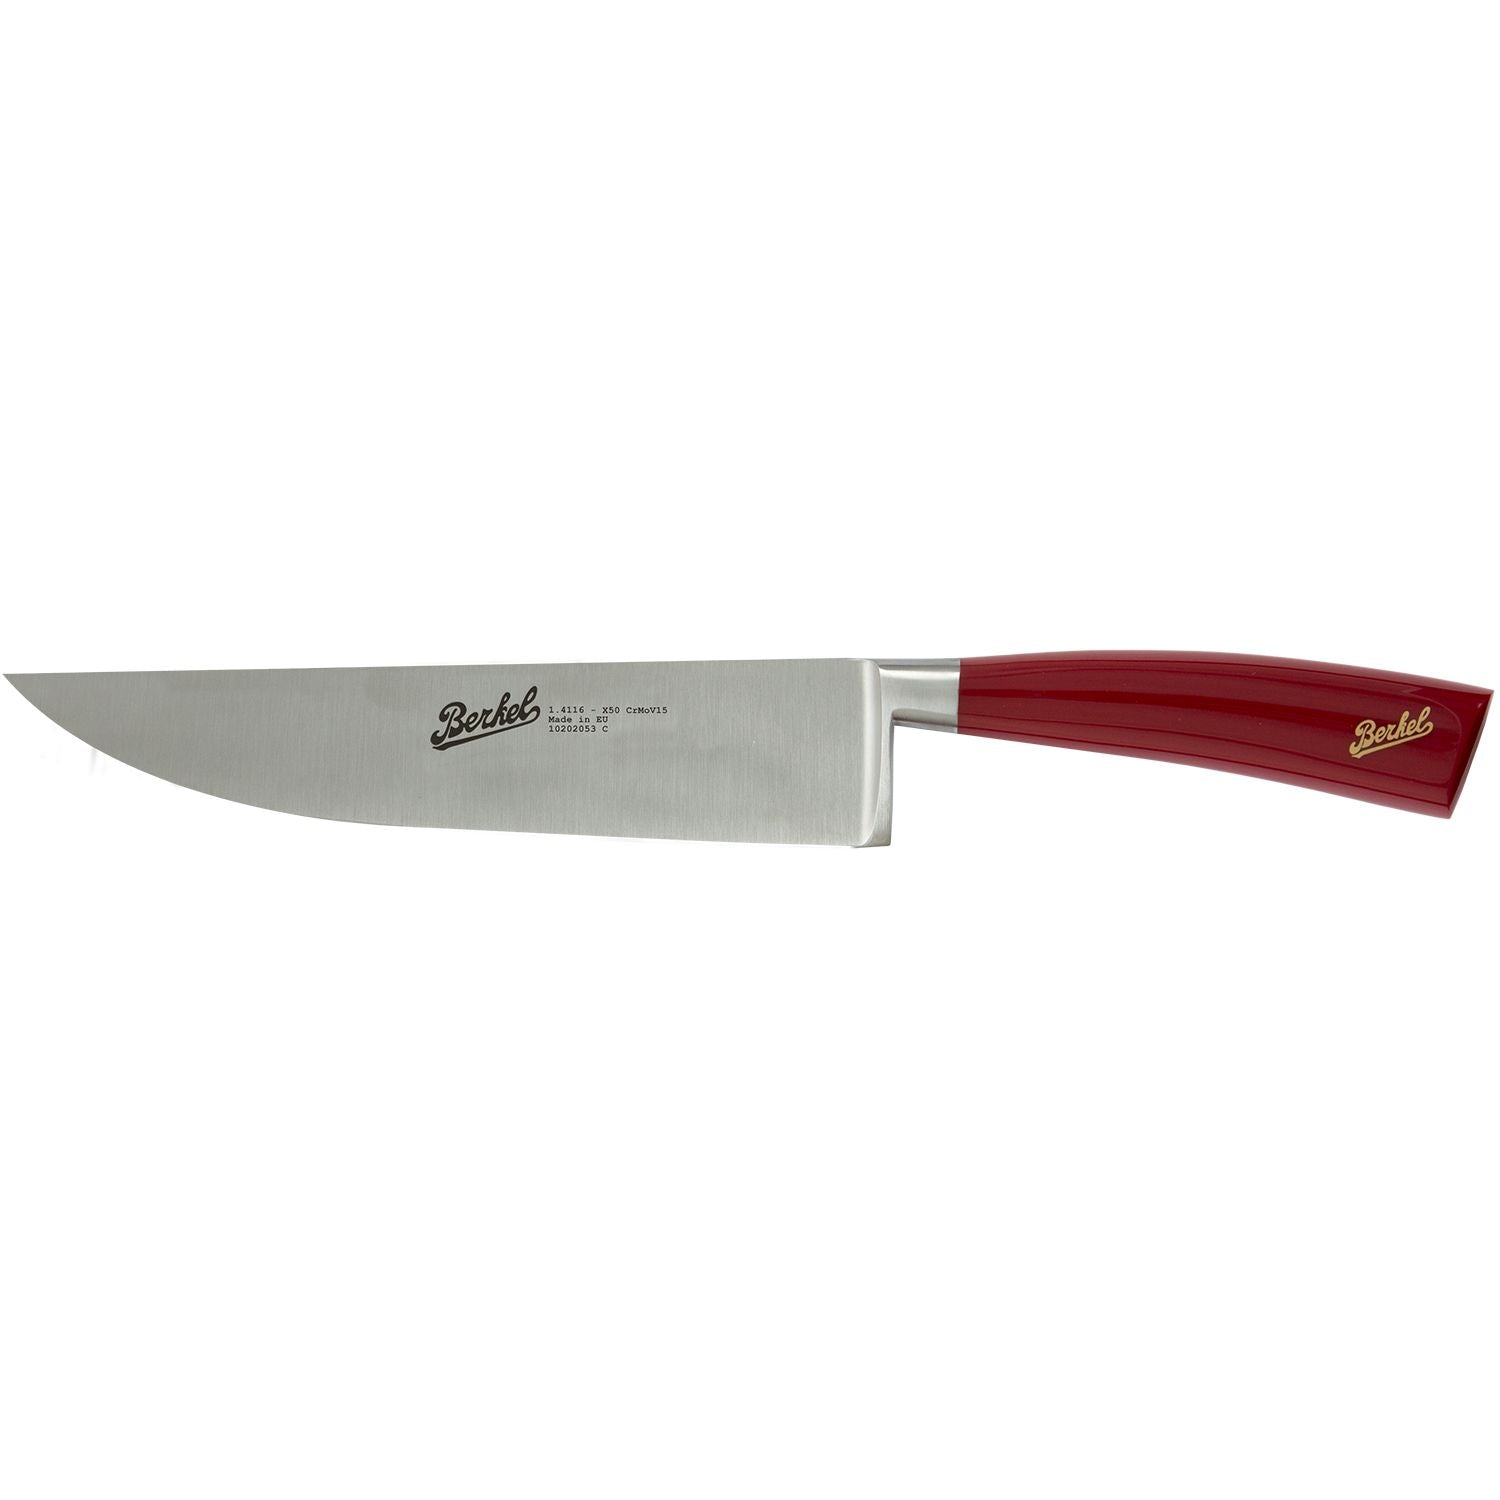 Berkel Elegance Kitchen Knife cm 20 Steel handle